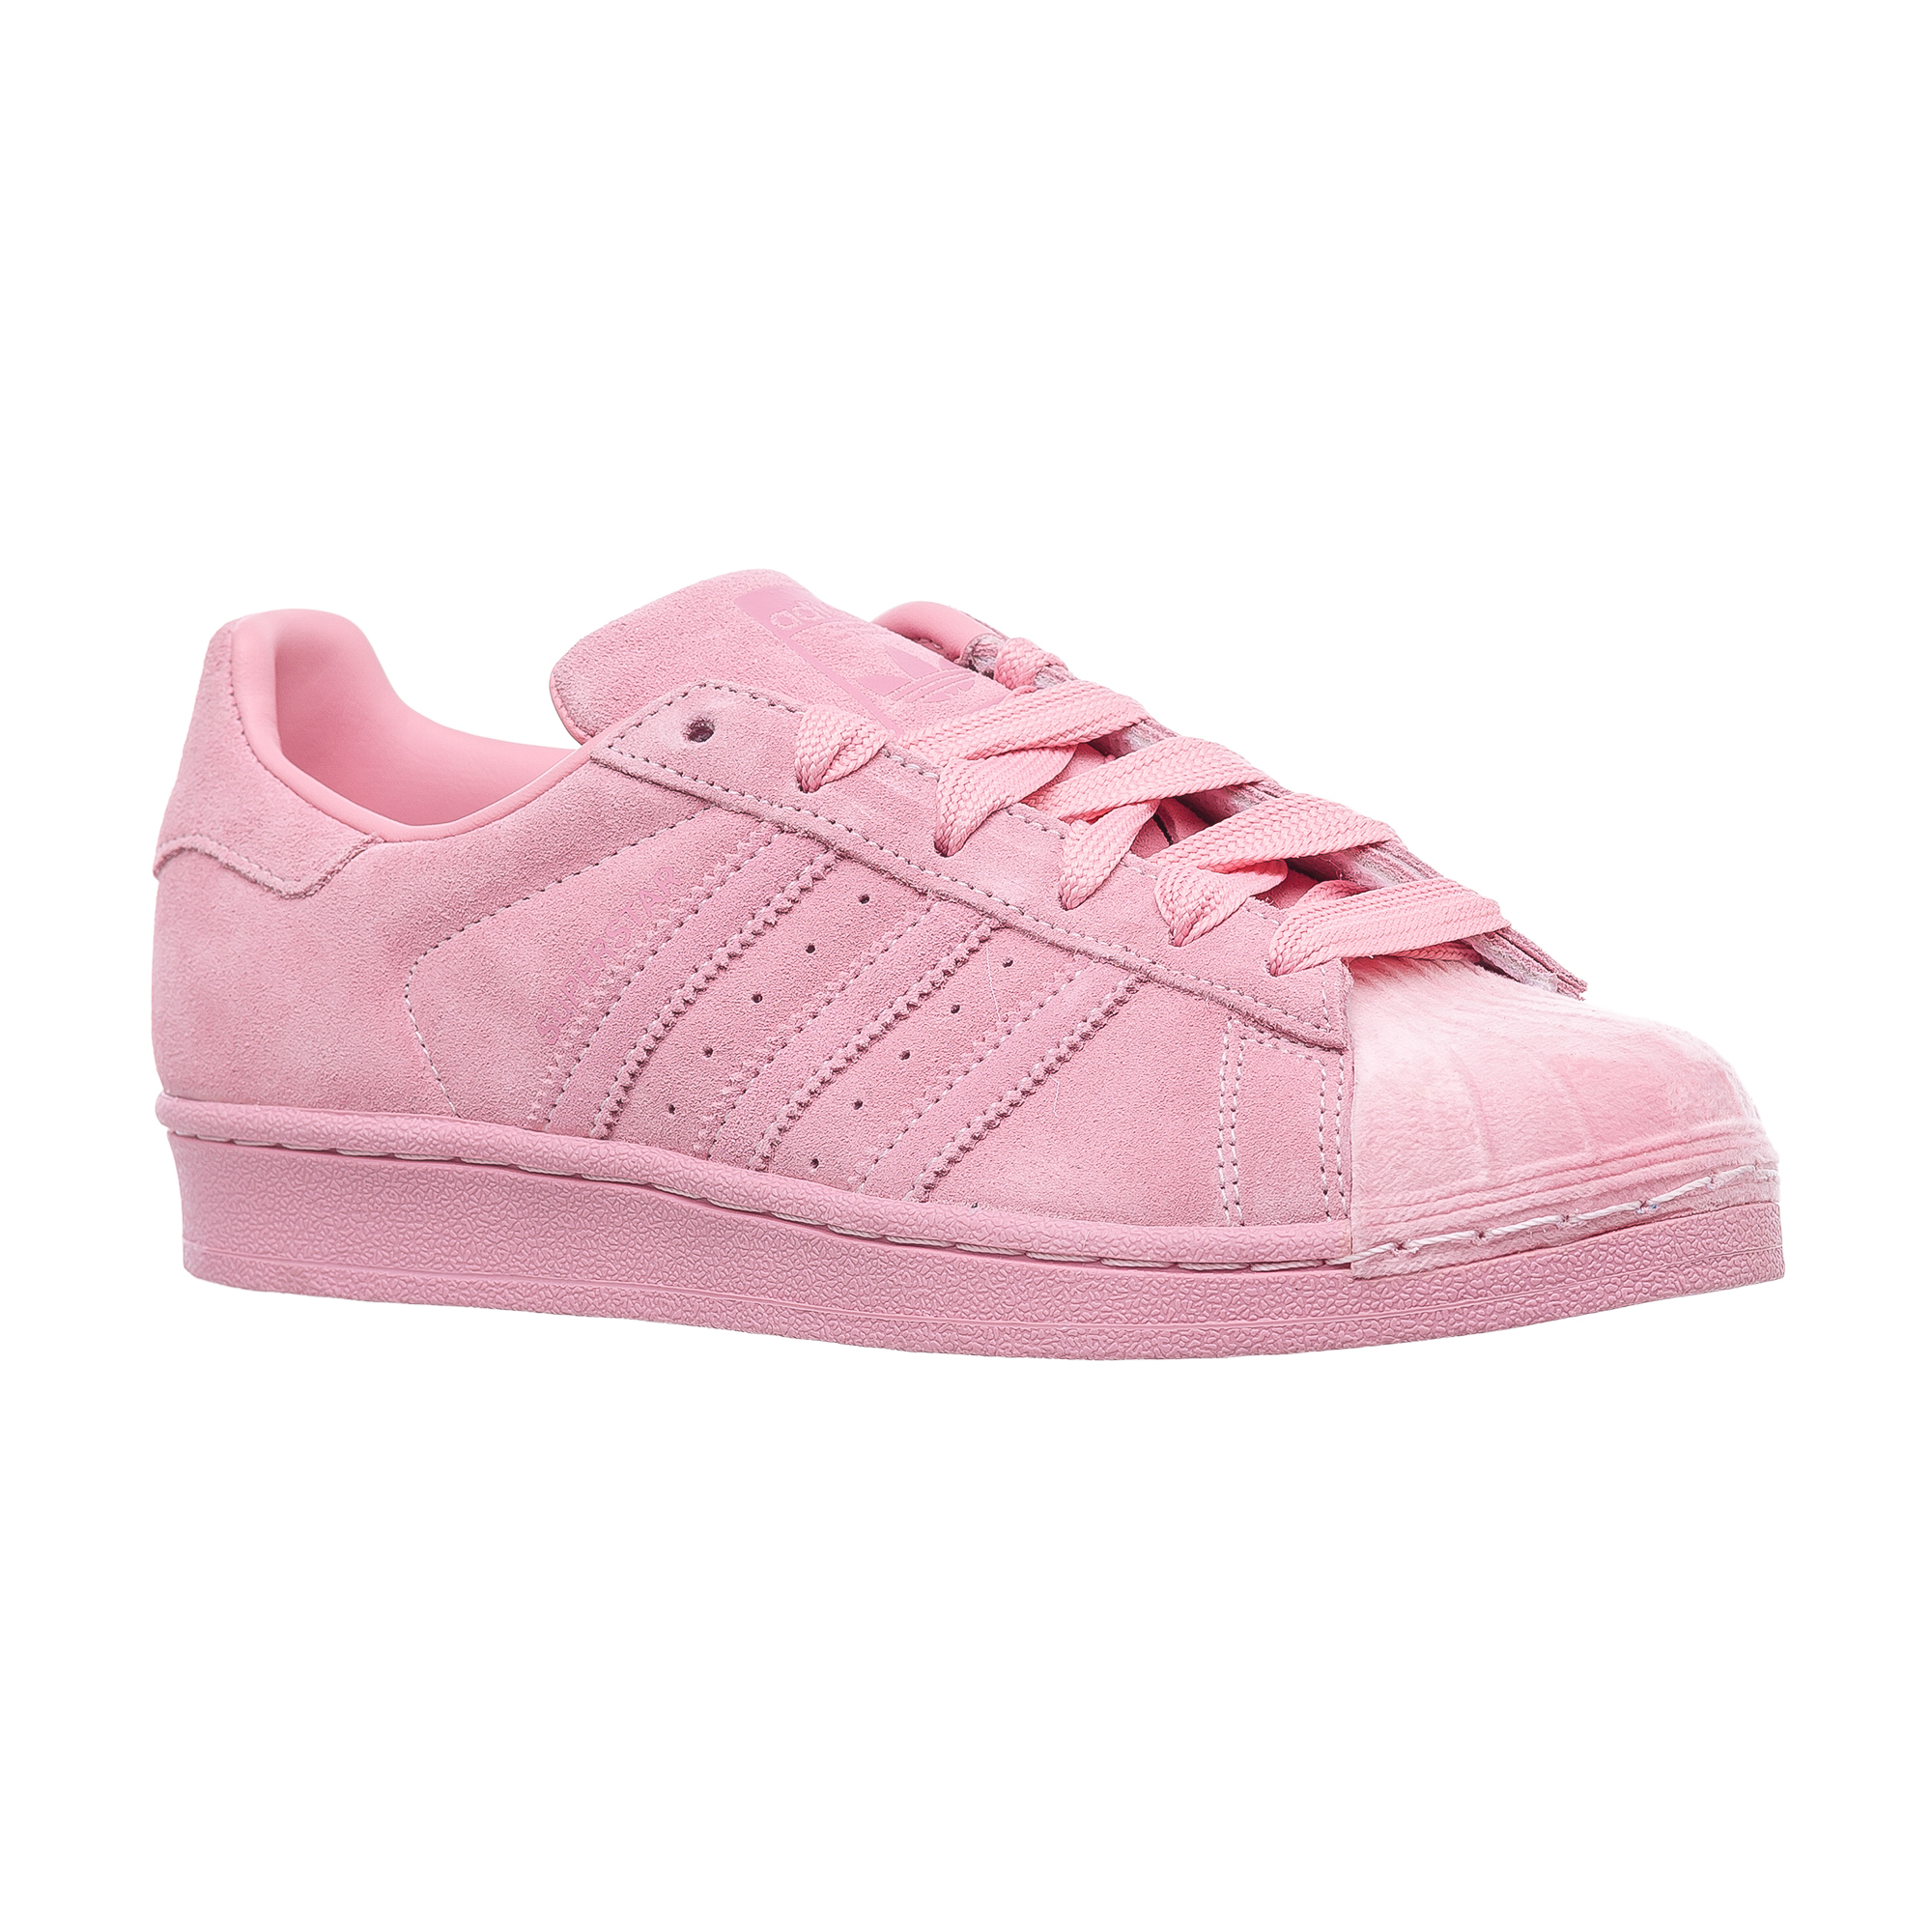 SUPERSTAR W Adidas, размер 37, цвет розовый ADCG6004 - фото 1